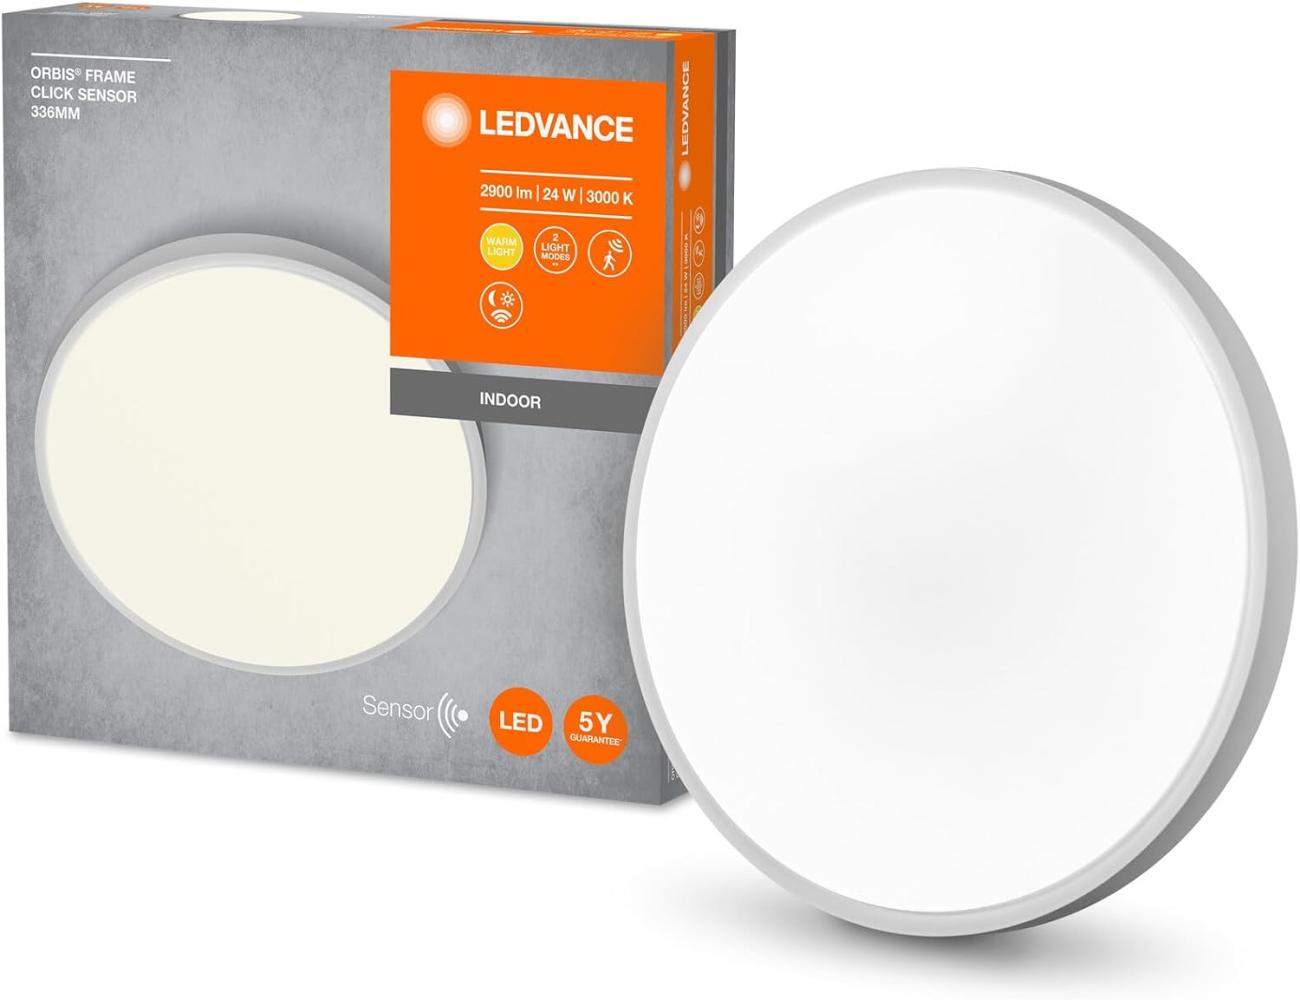 LEDVANCE ORBIS Frame Click Sensor 24W 335 mm white Bild 1